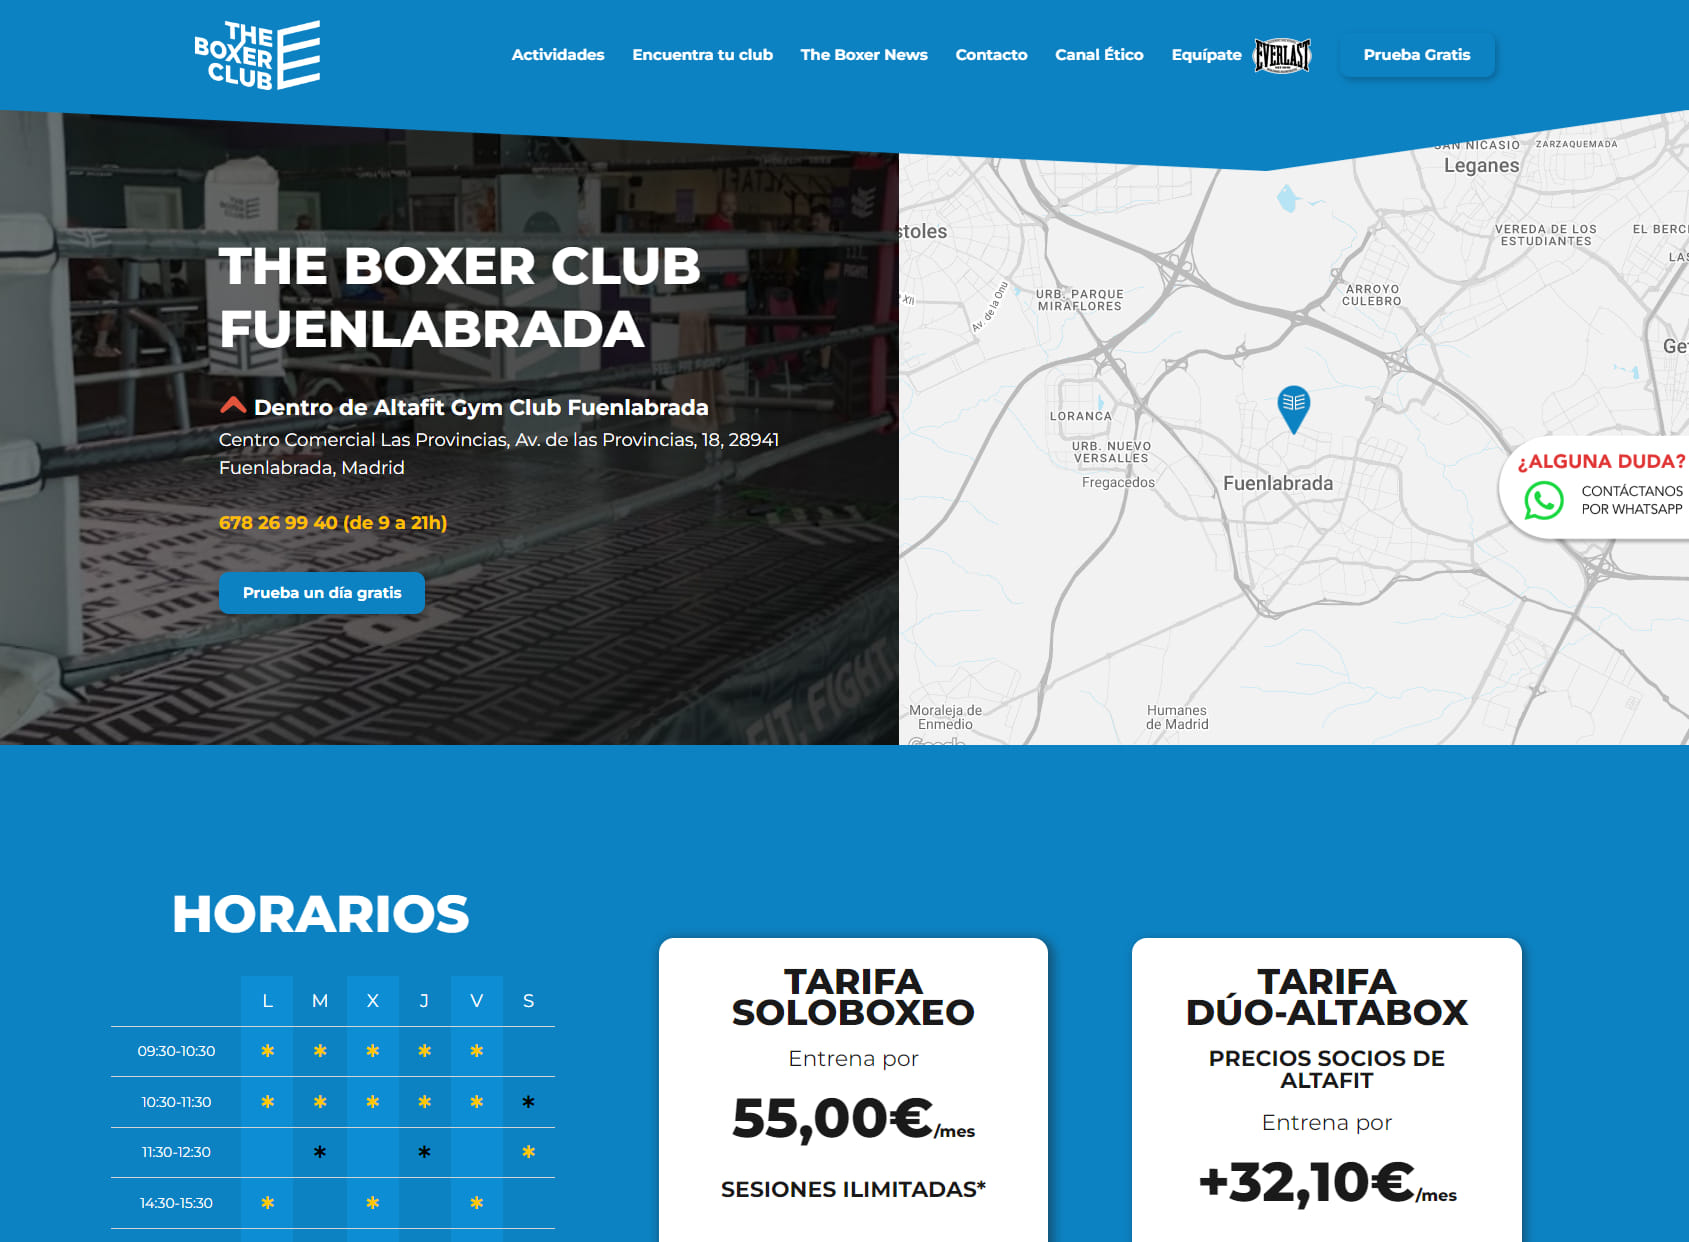 The Boxer Club Fuenlabrada